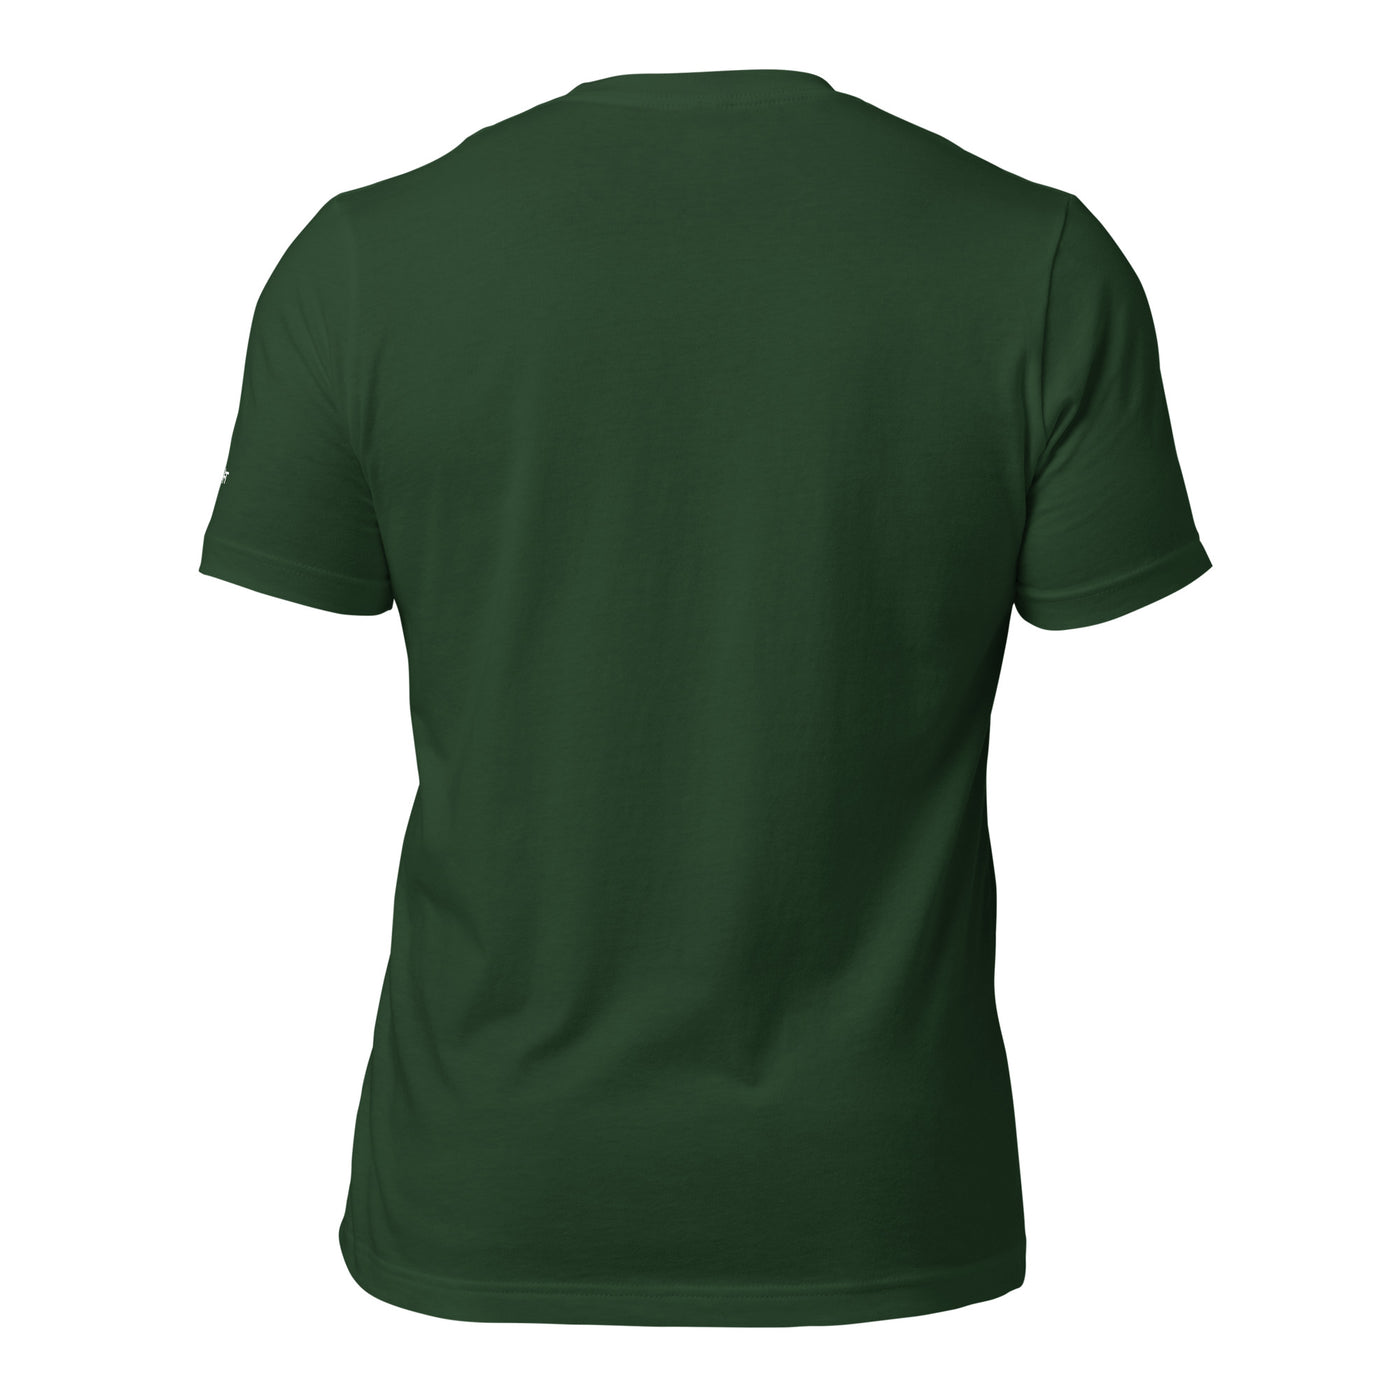 Train Hard - Unisex t-shirt (back print)